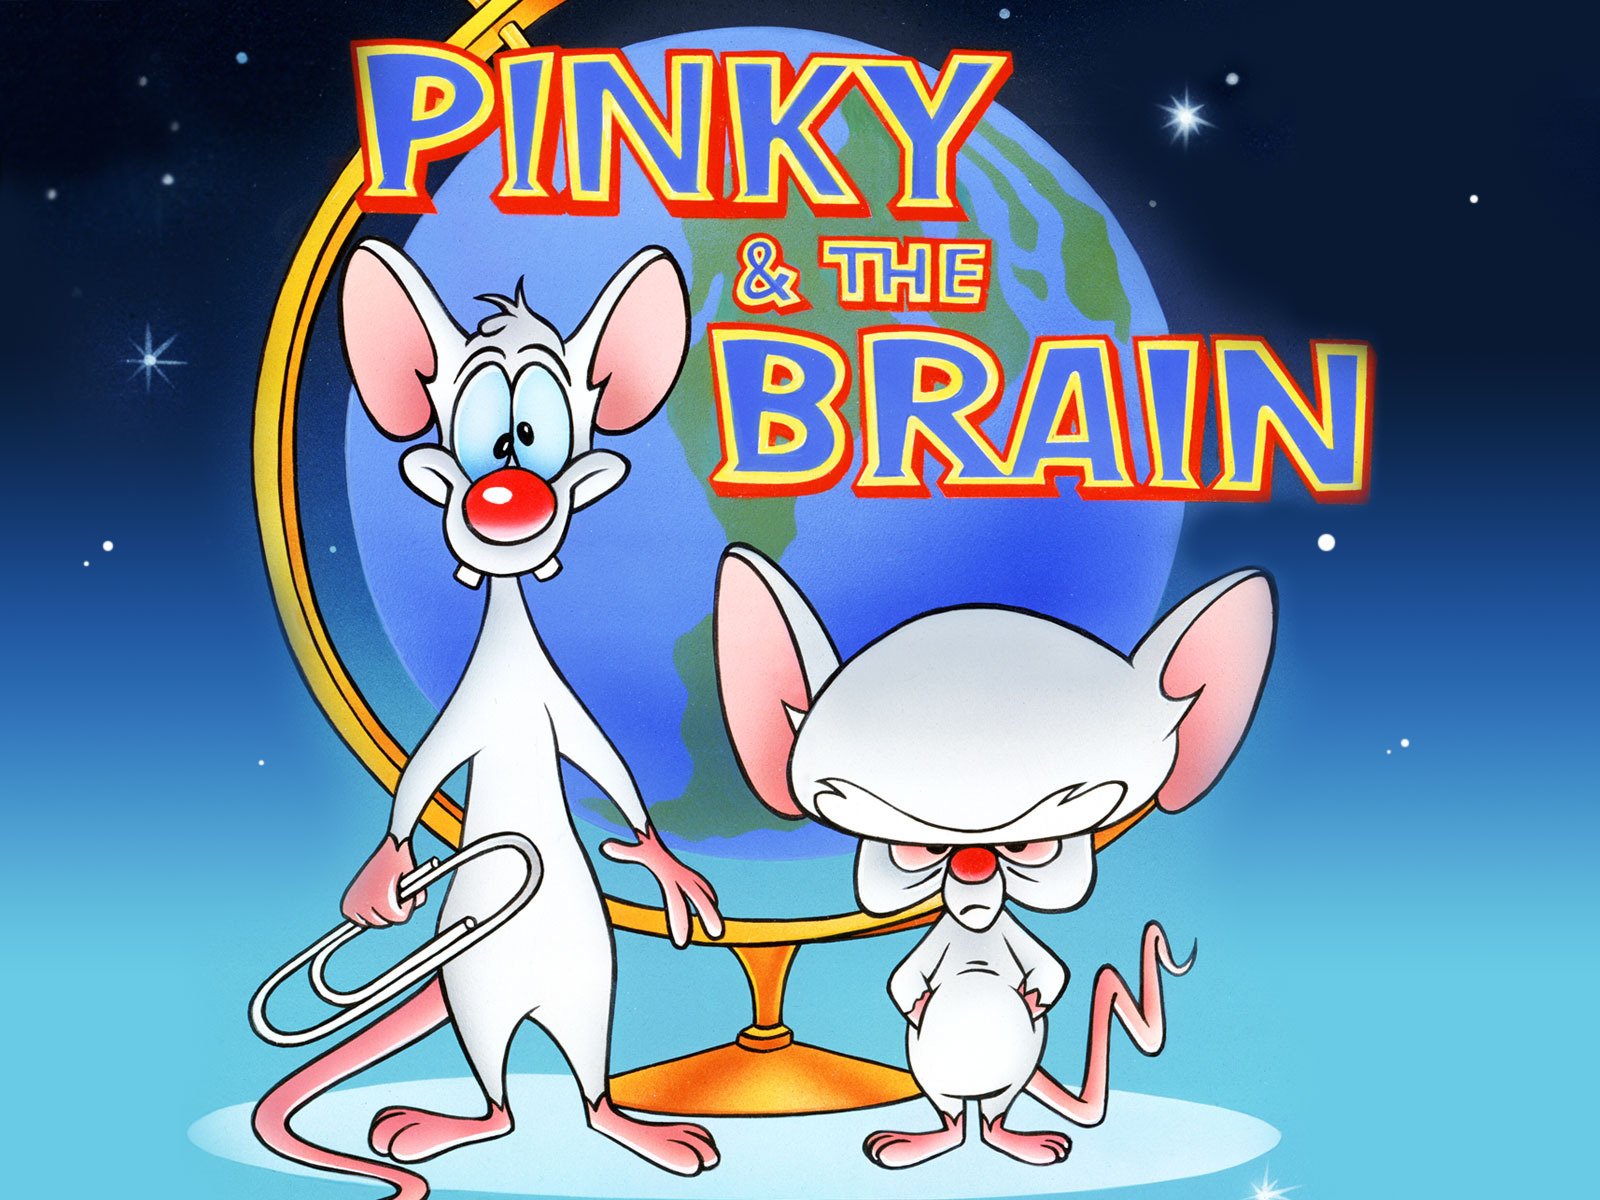 Pinky and brain. Мыши которые хотели захватить мир. Мышонок который хотел захватить мир.